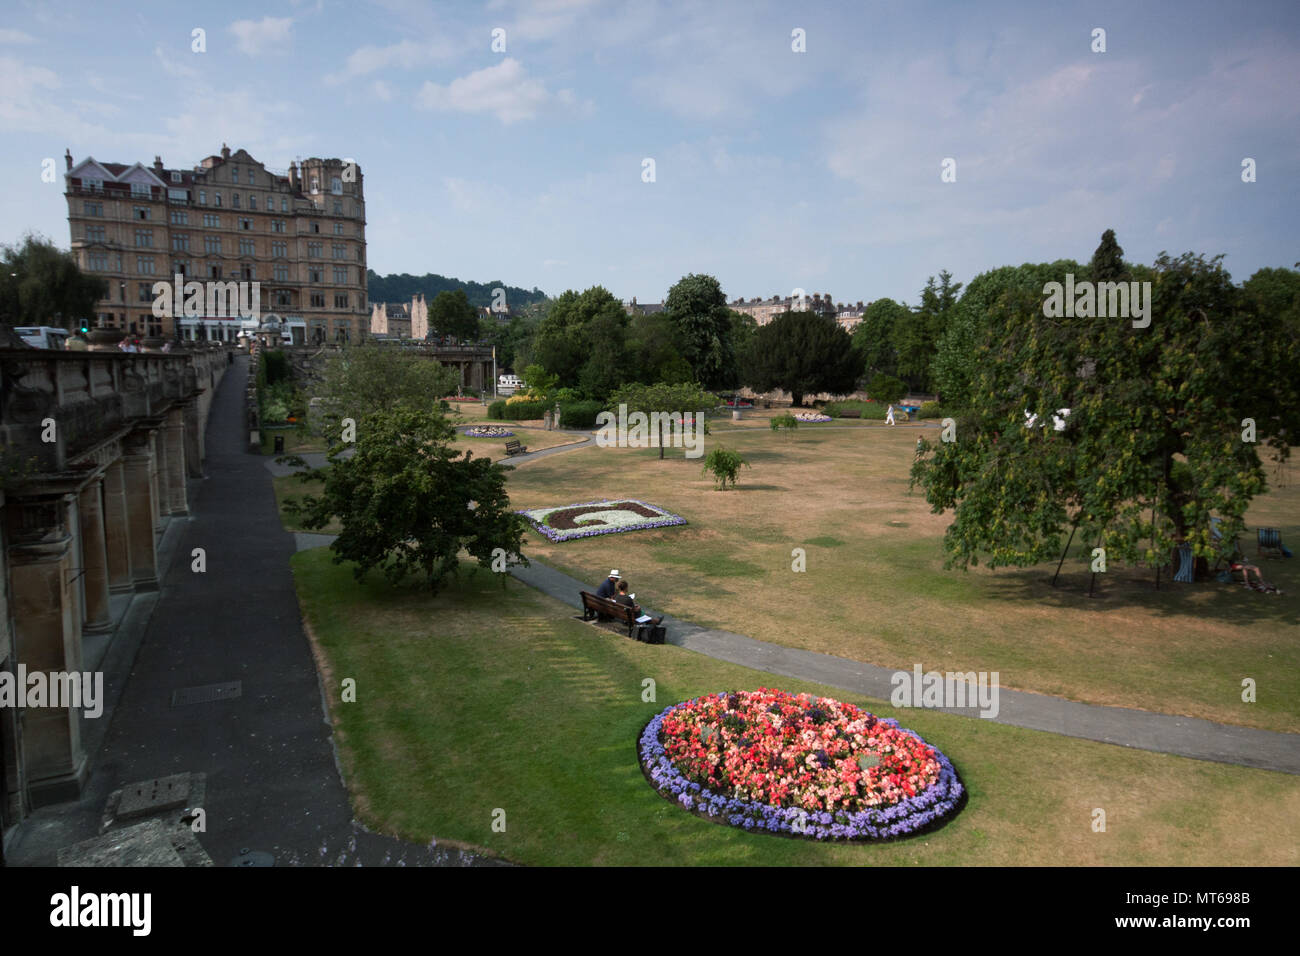 Parade gardens in the city of Bath, England, UK. Stock Photo